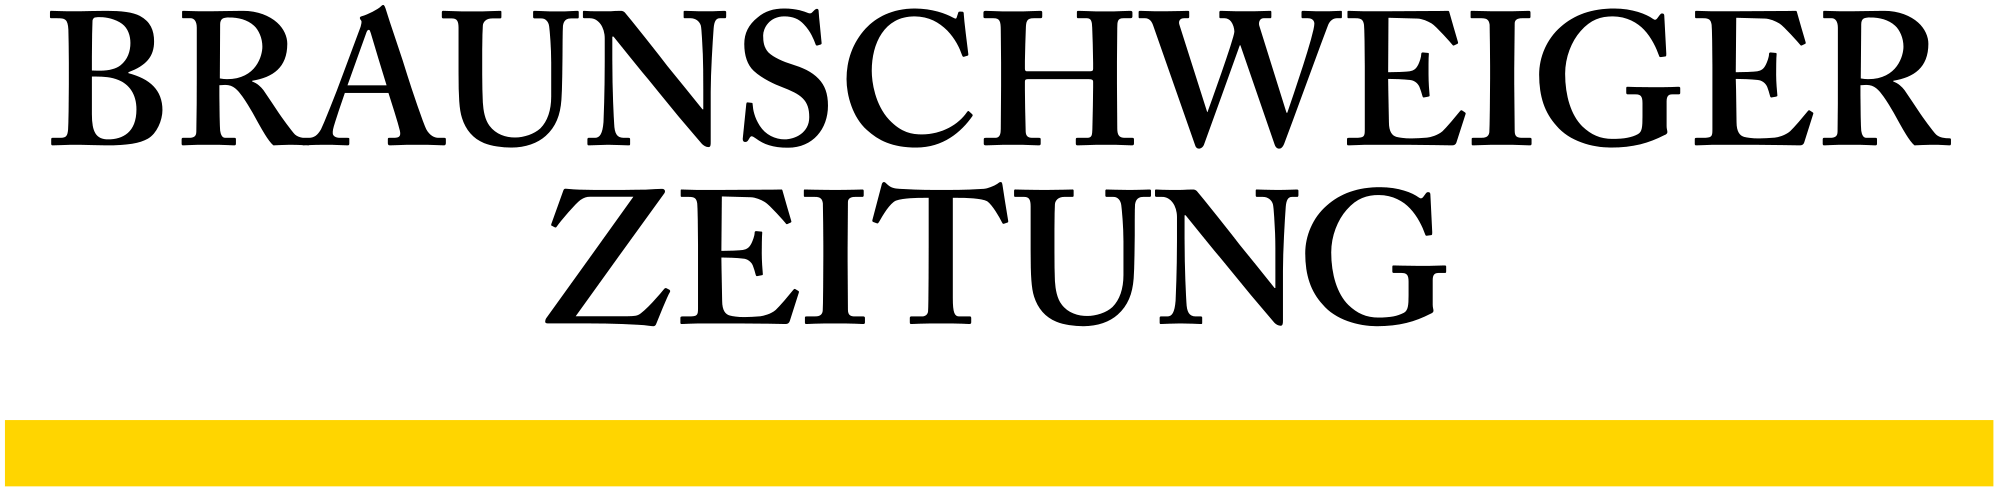 2000px-Braunschweiger_Zeitung_Logo.svg